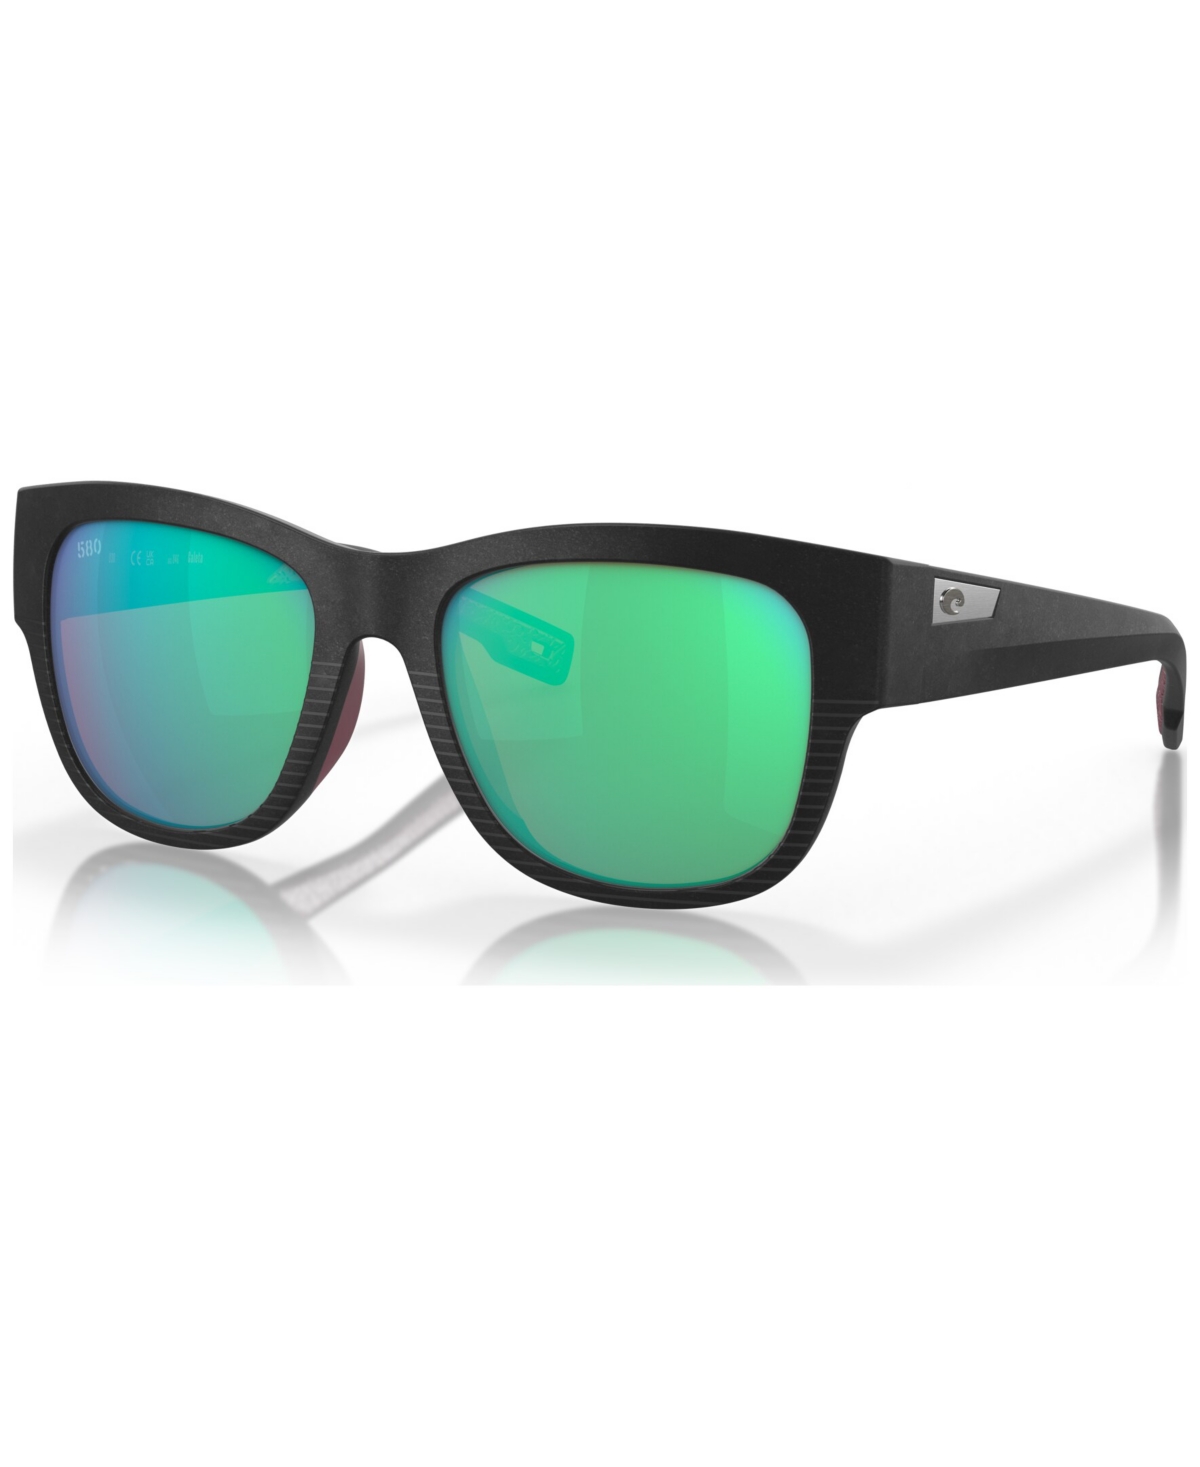 Women's Polarized Sunglasses, 6S9084 Caleta - Net Black